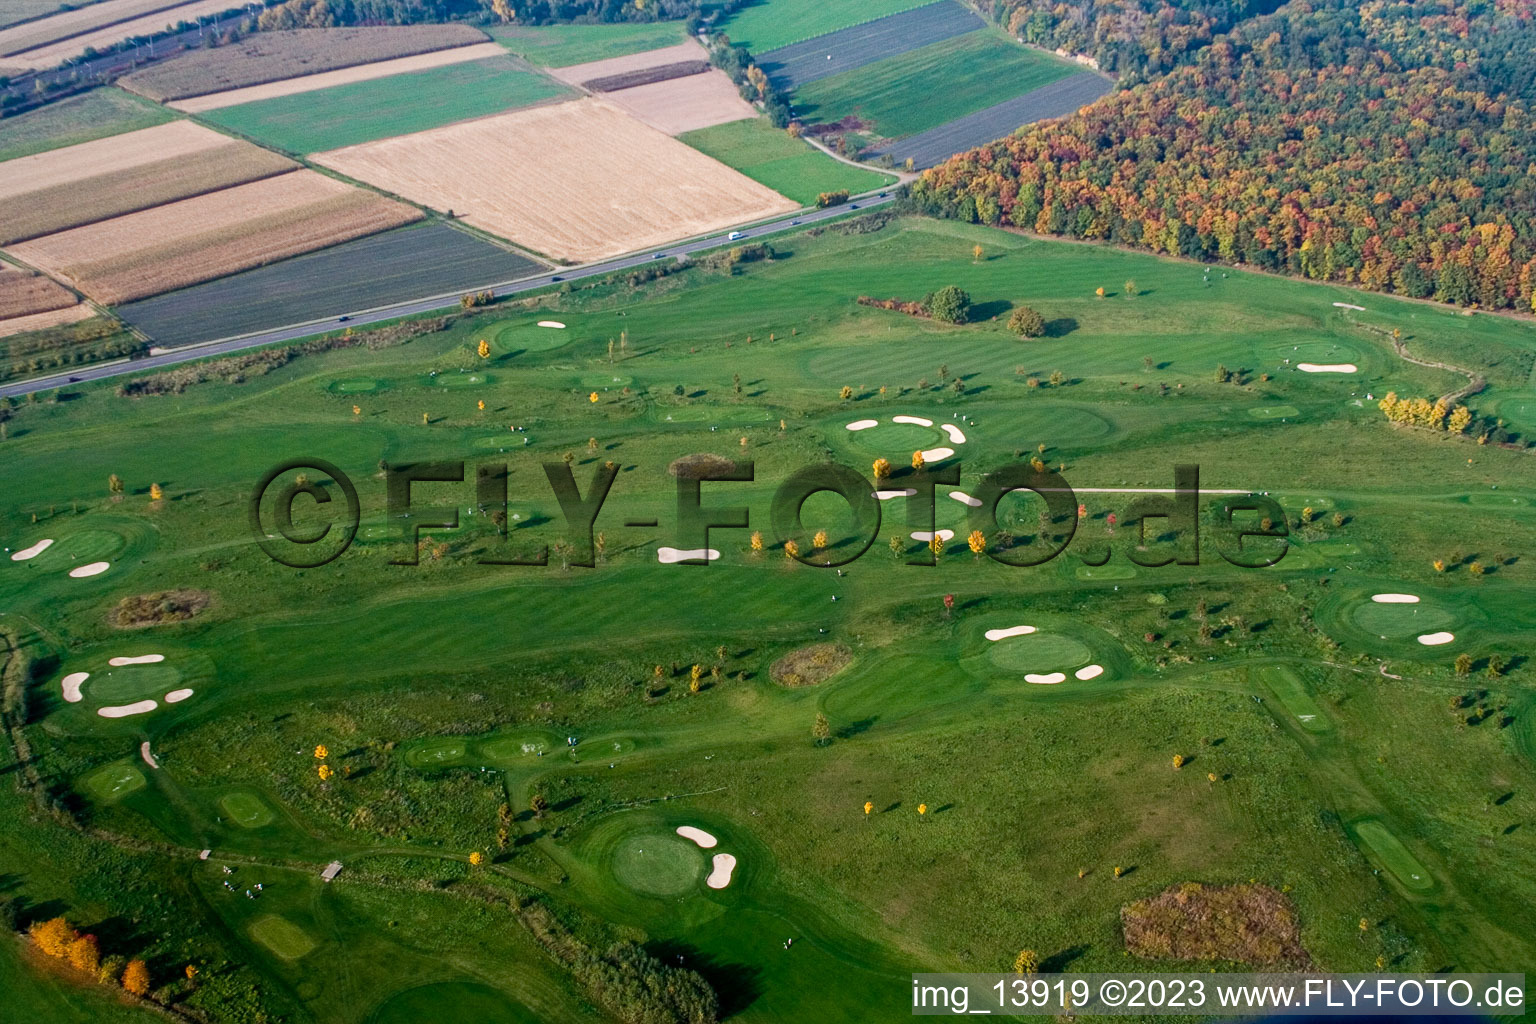 Drone image of Golf club Urloffen eV in the district Urloffen in Appenweier in the state Baden-Wuerttemberg, Germany